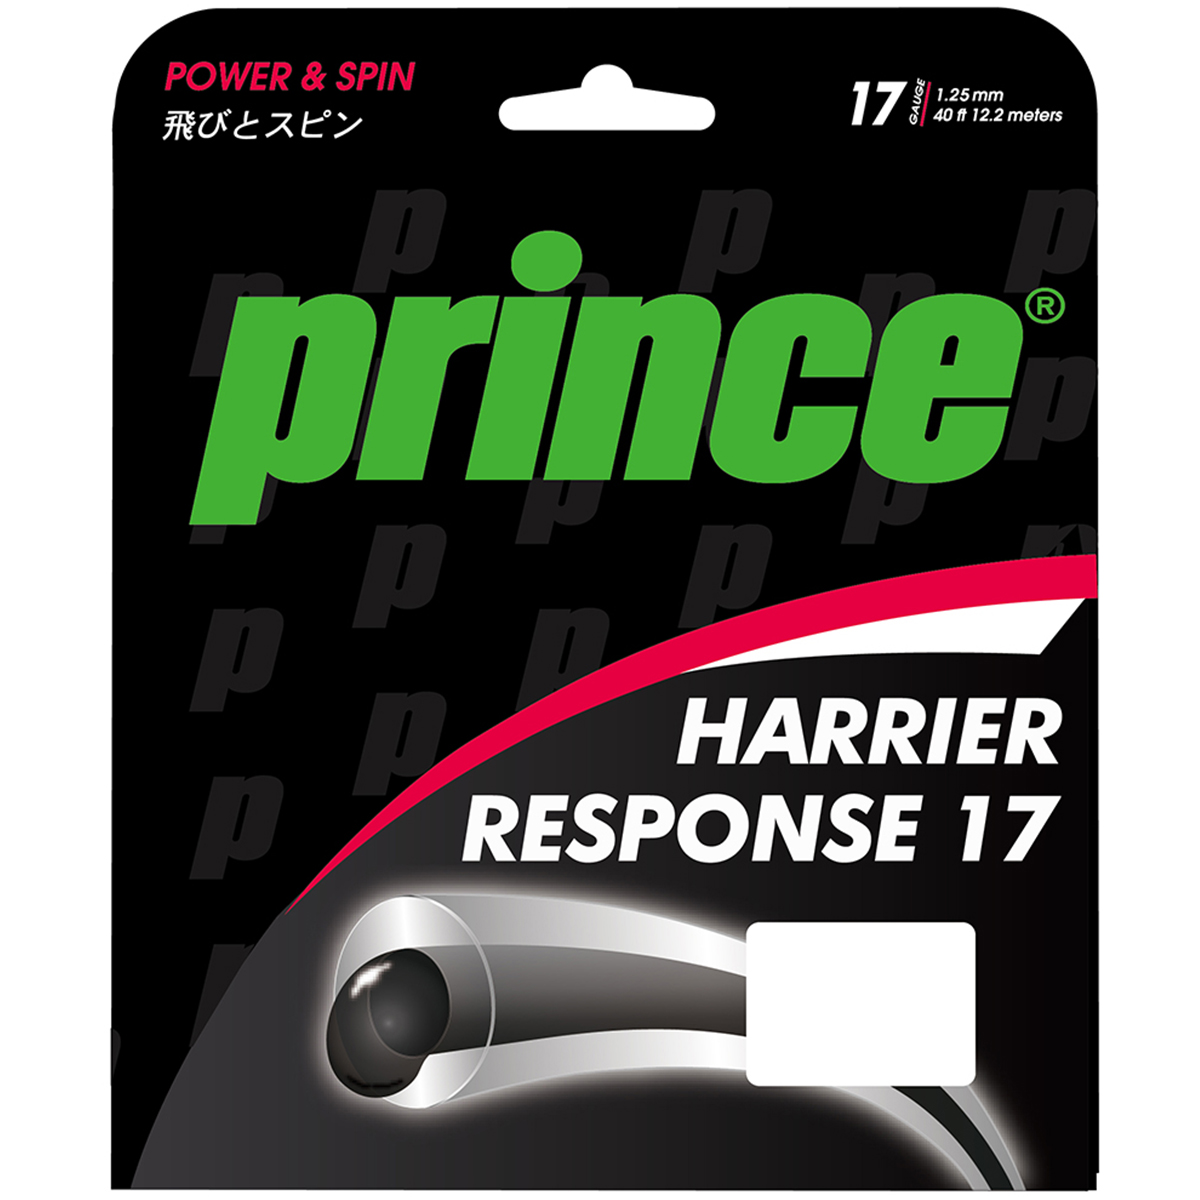 HARRIER RESPONSE 17 - Prince プリンステニス公式サイト